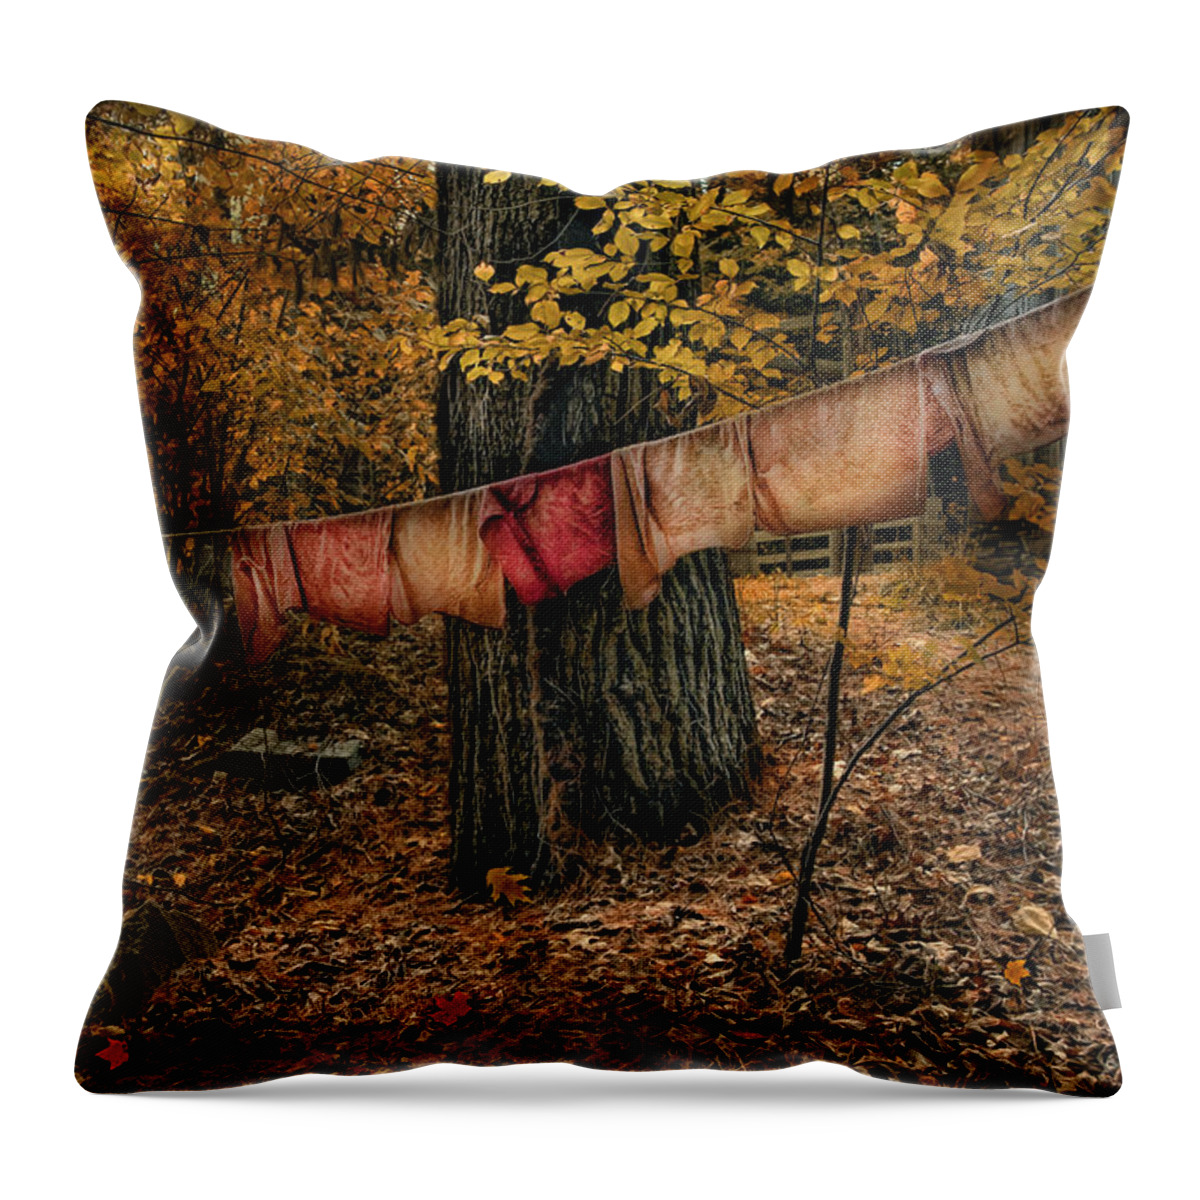 Autumn Throw Pillow featuring the photograph Autumn Linens by Robin-Lee Vieira